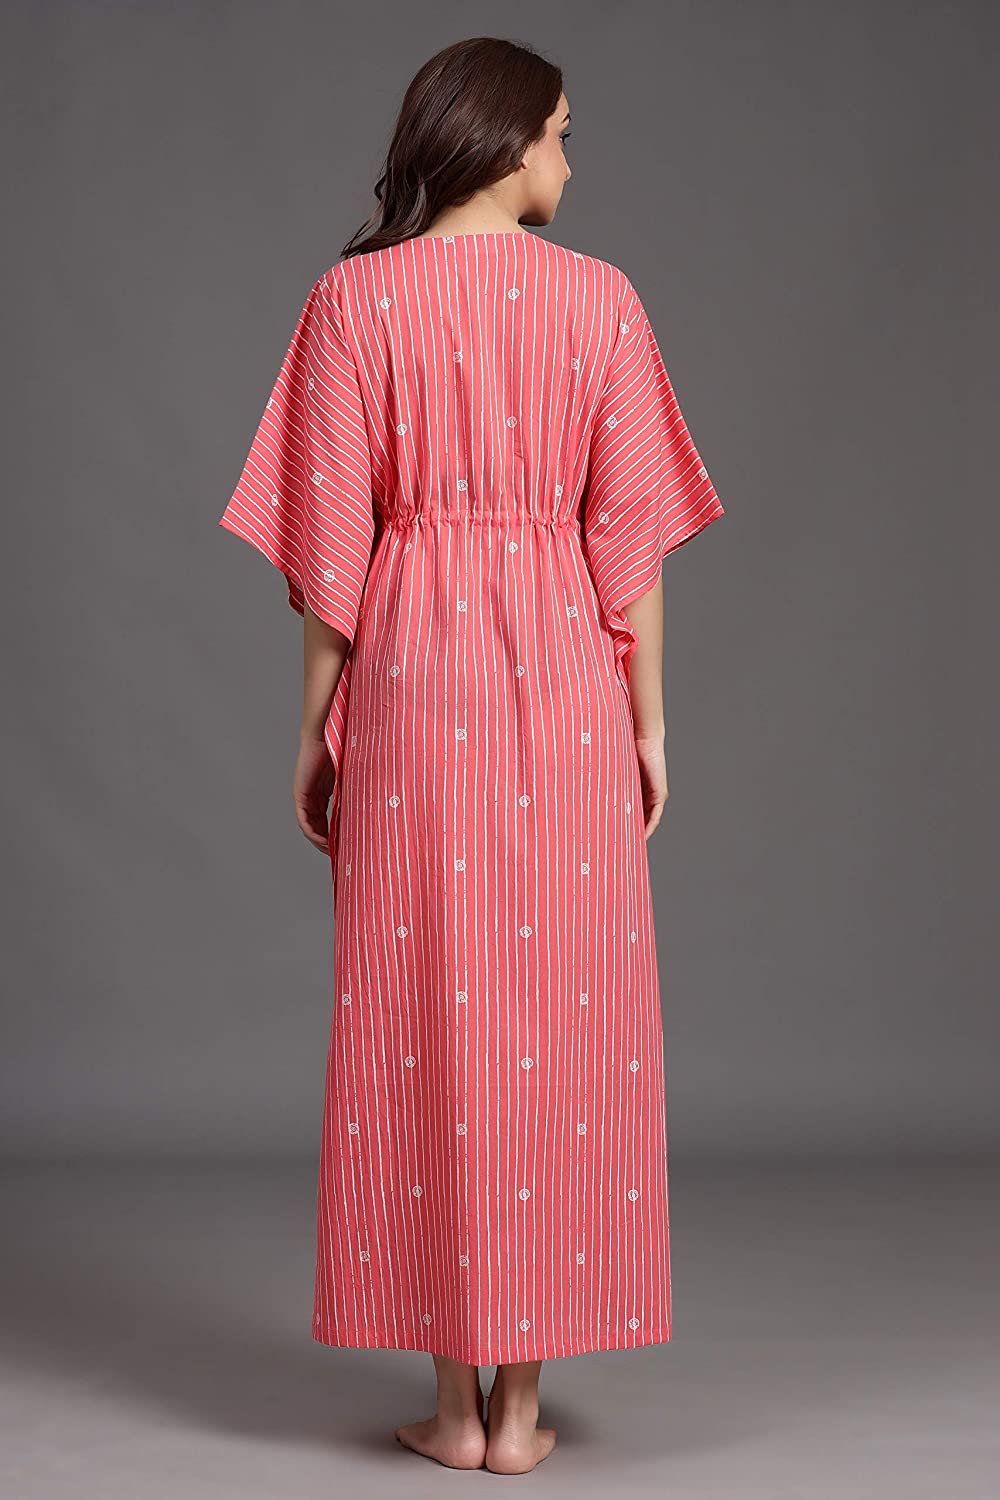 Stroked Rings on Pink Loungewear JISORA